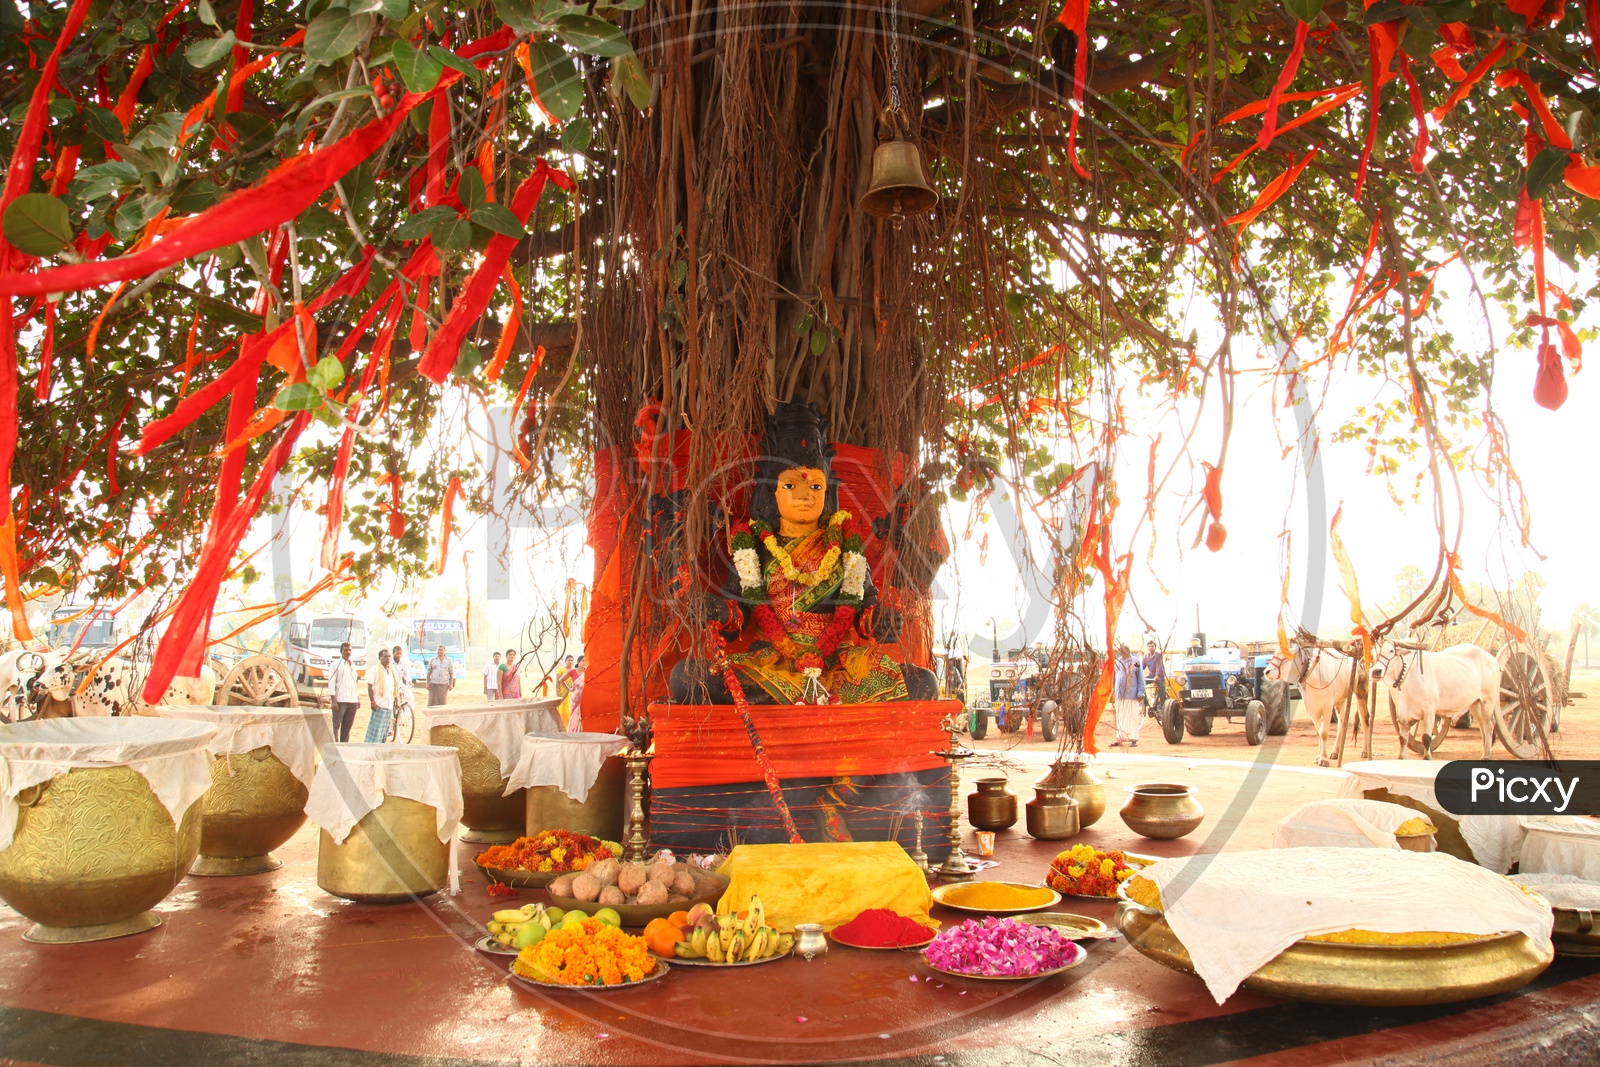 Hindu Goddess Idol Under A Tree